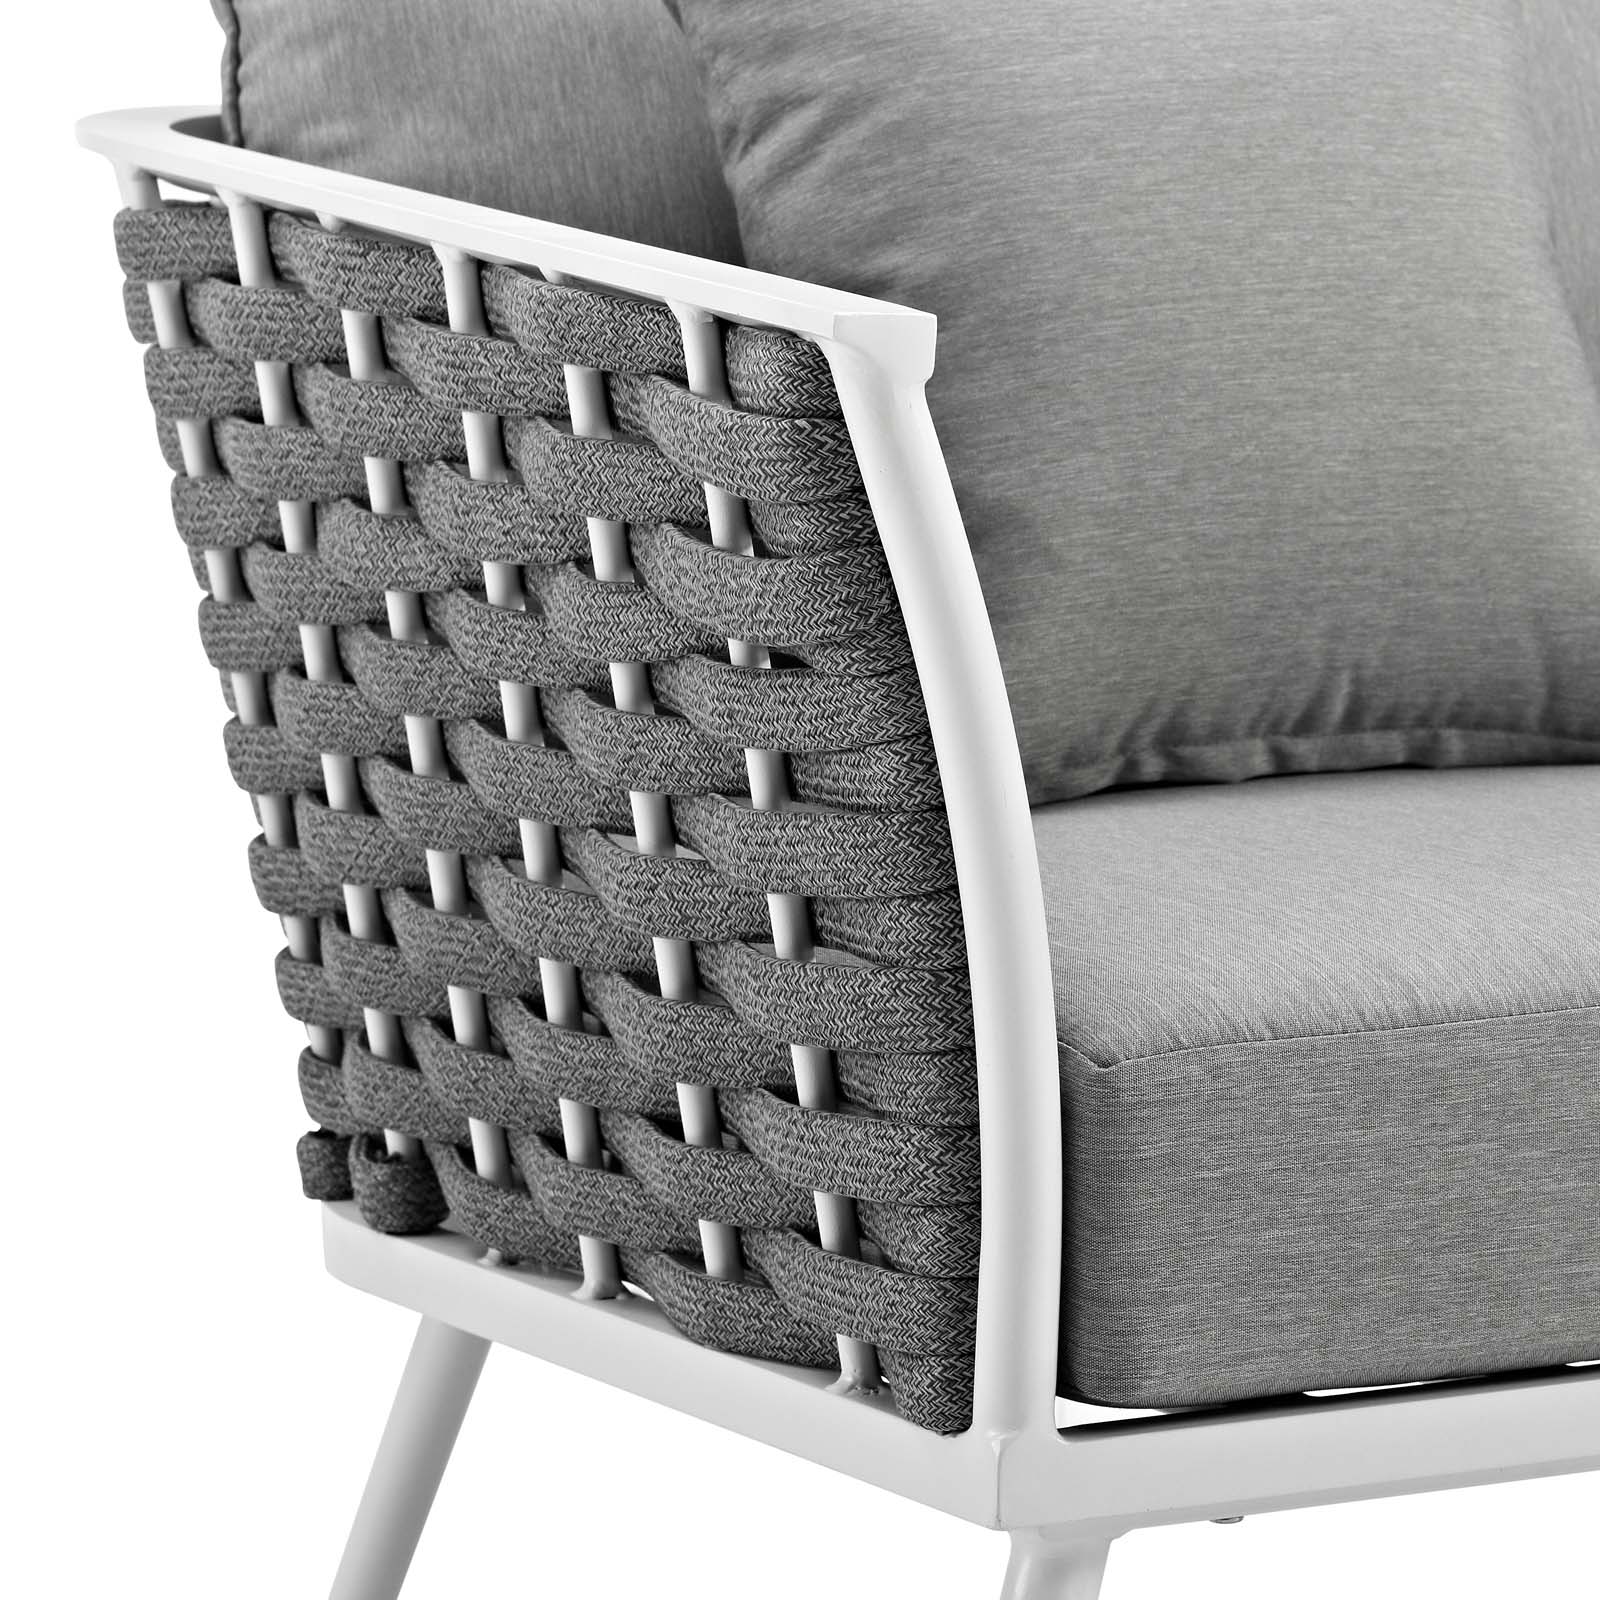 Modern Contemporary Urban Design Outdoor Patio Balcony Garden Furniture Lounge Chair Armchair, Aluminum Metal Steel, White - image 2 of 4